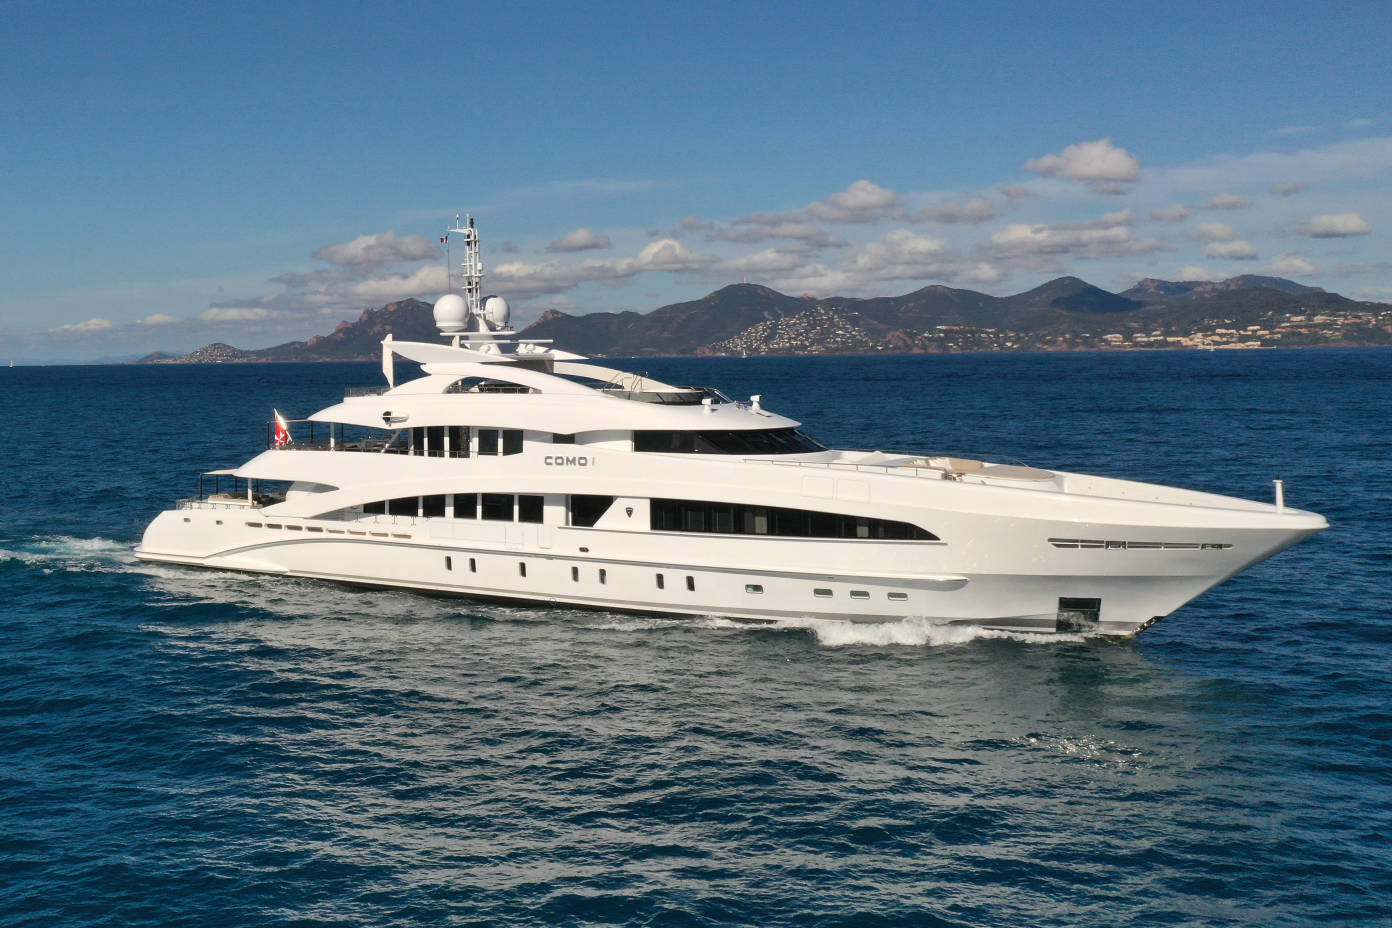 luxury yachts fir sale